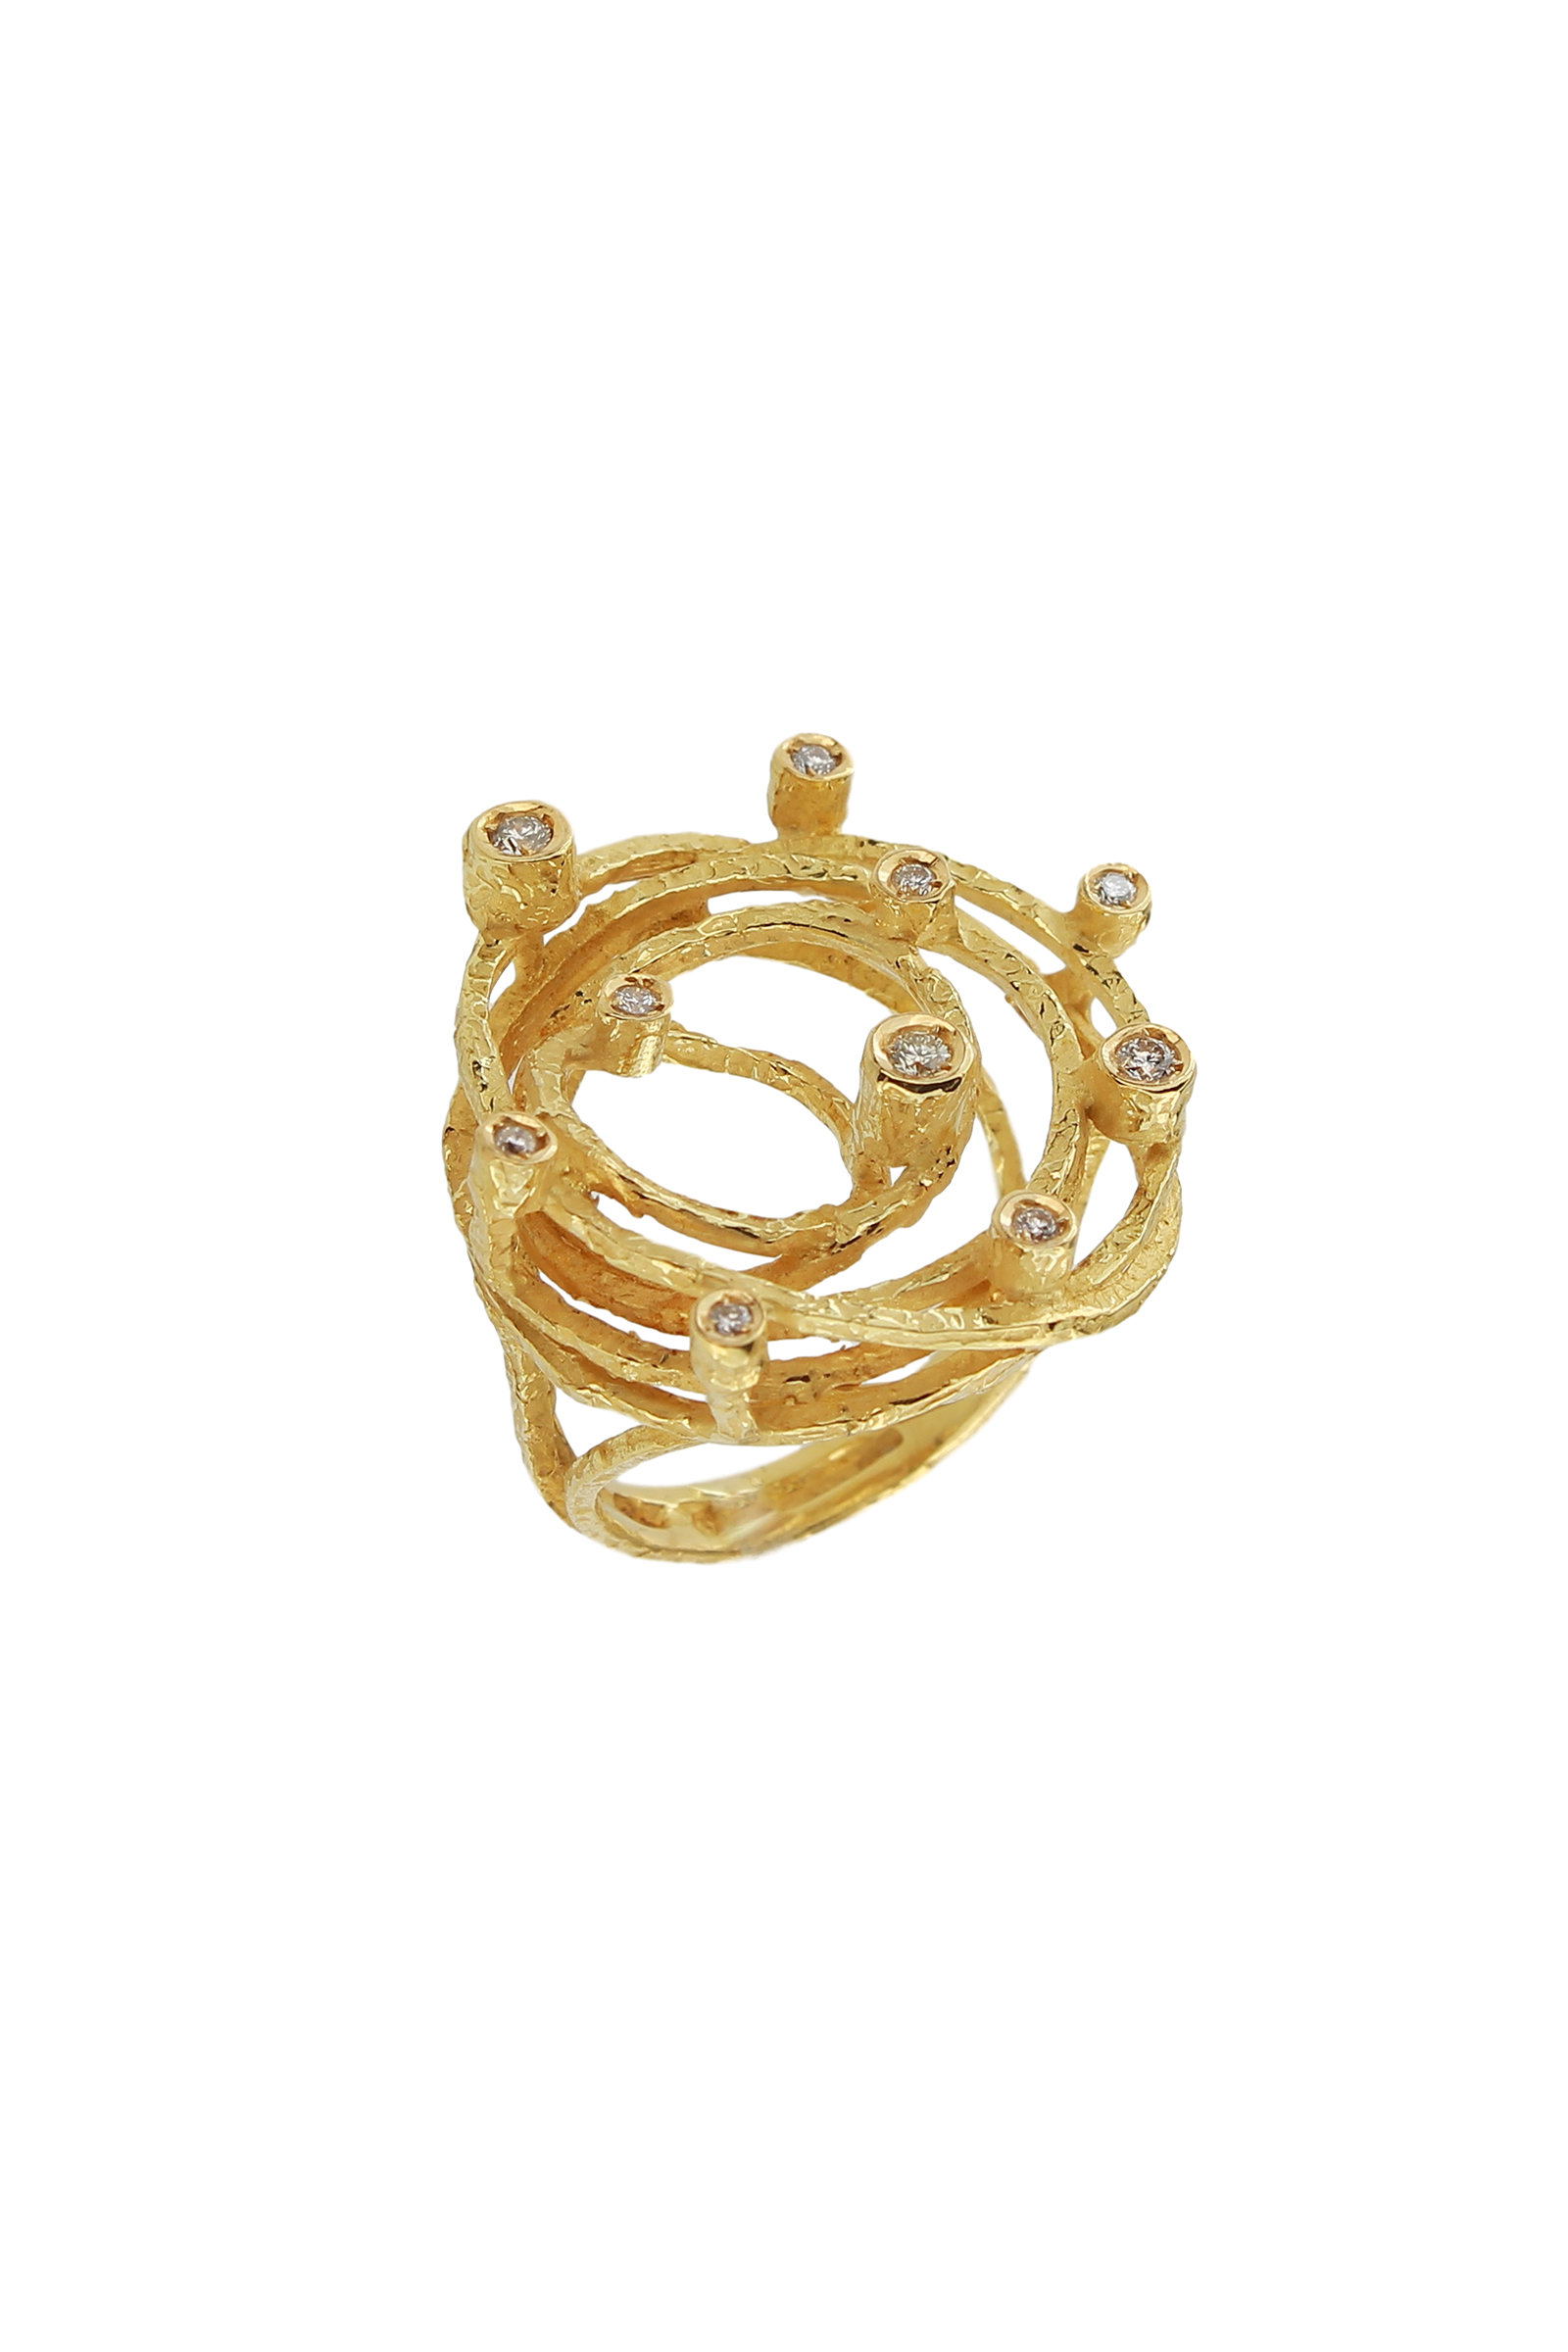 SE306BTA-18-Kt-Yellow-Gold-Orbit-Ring-with-Diamonds-1